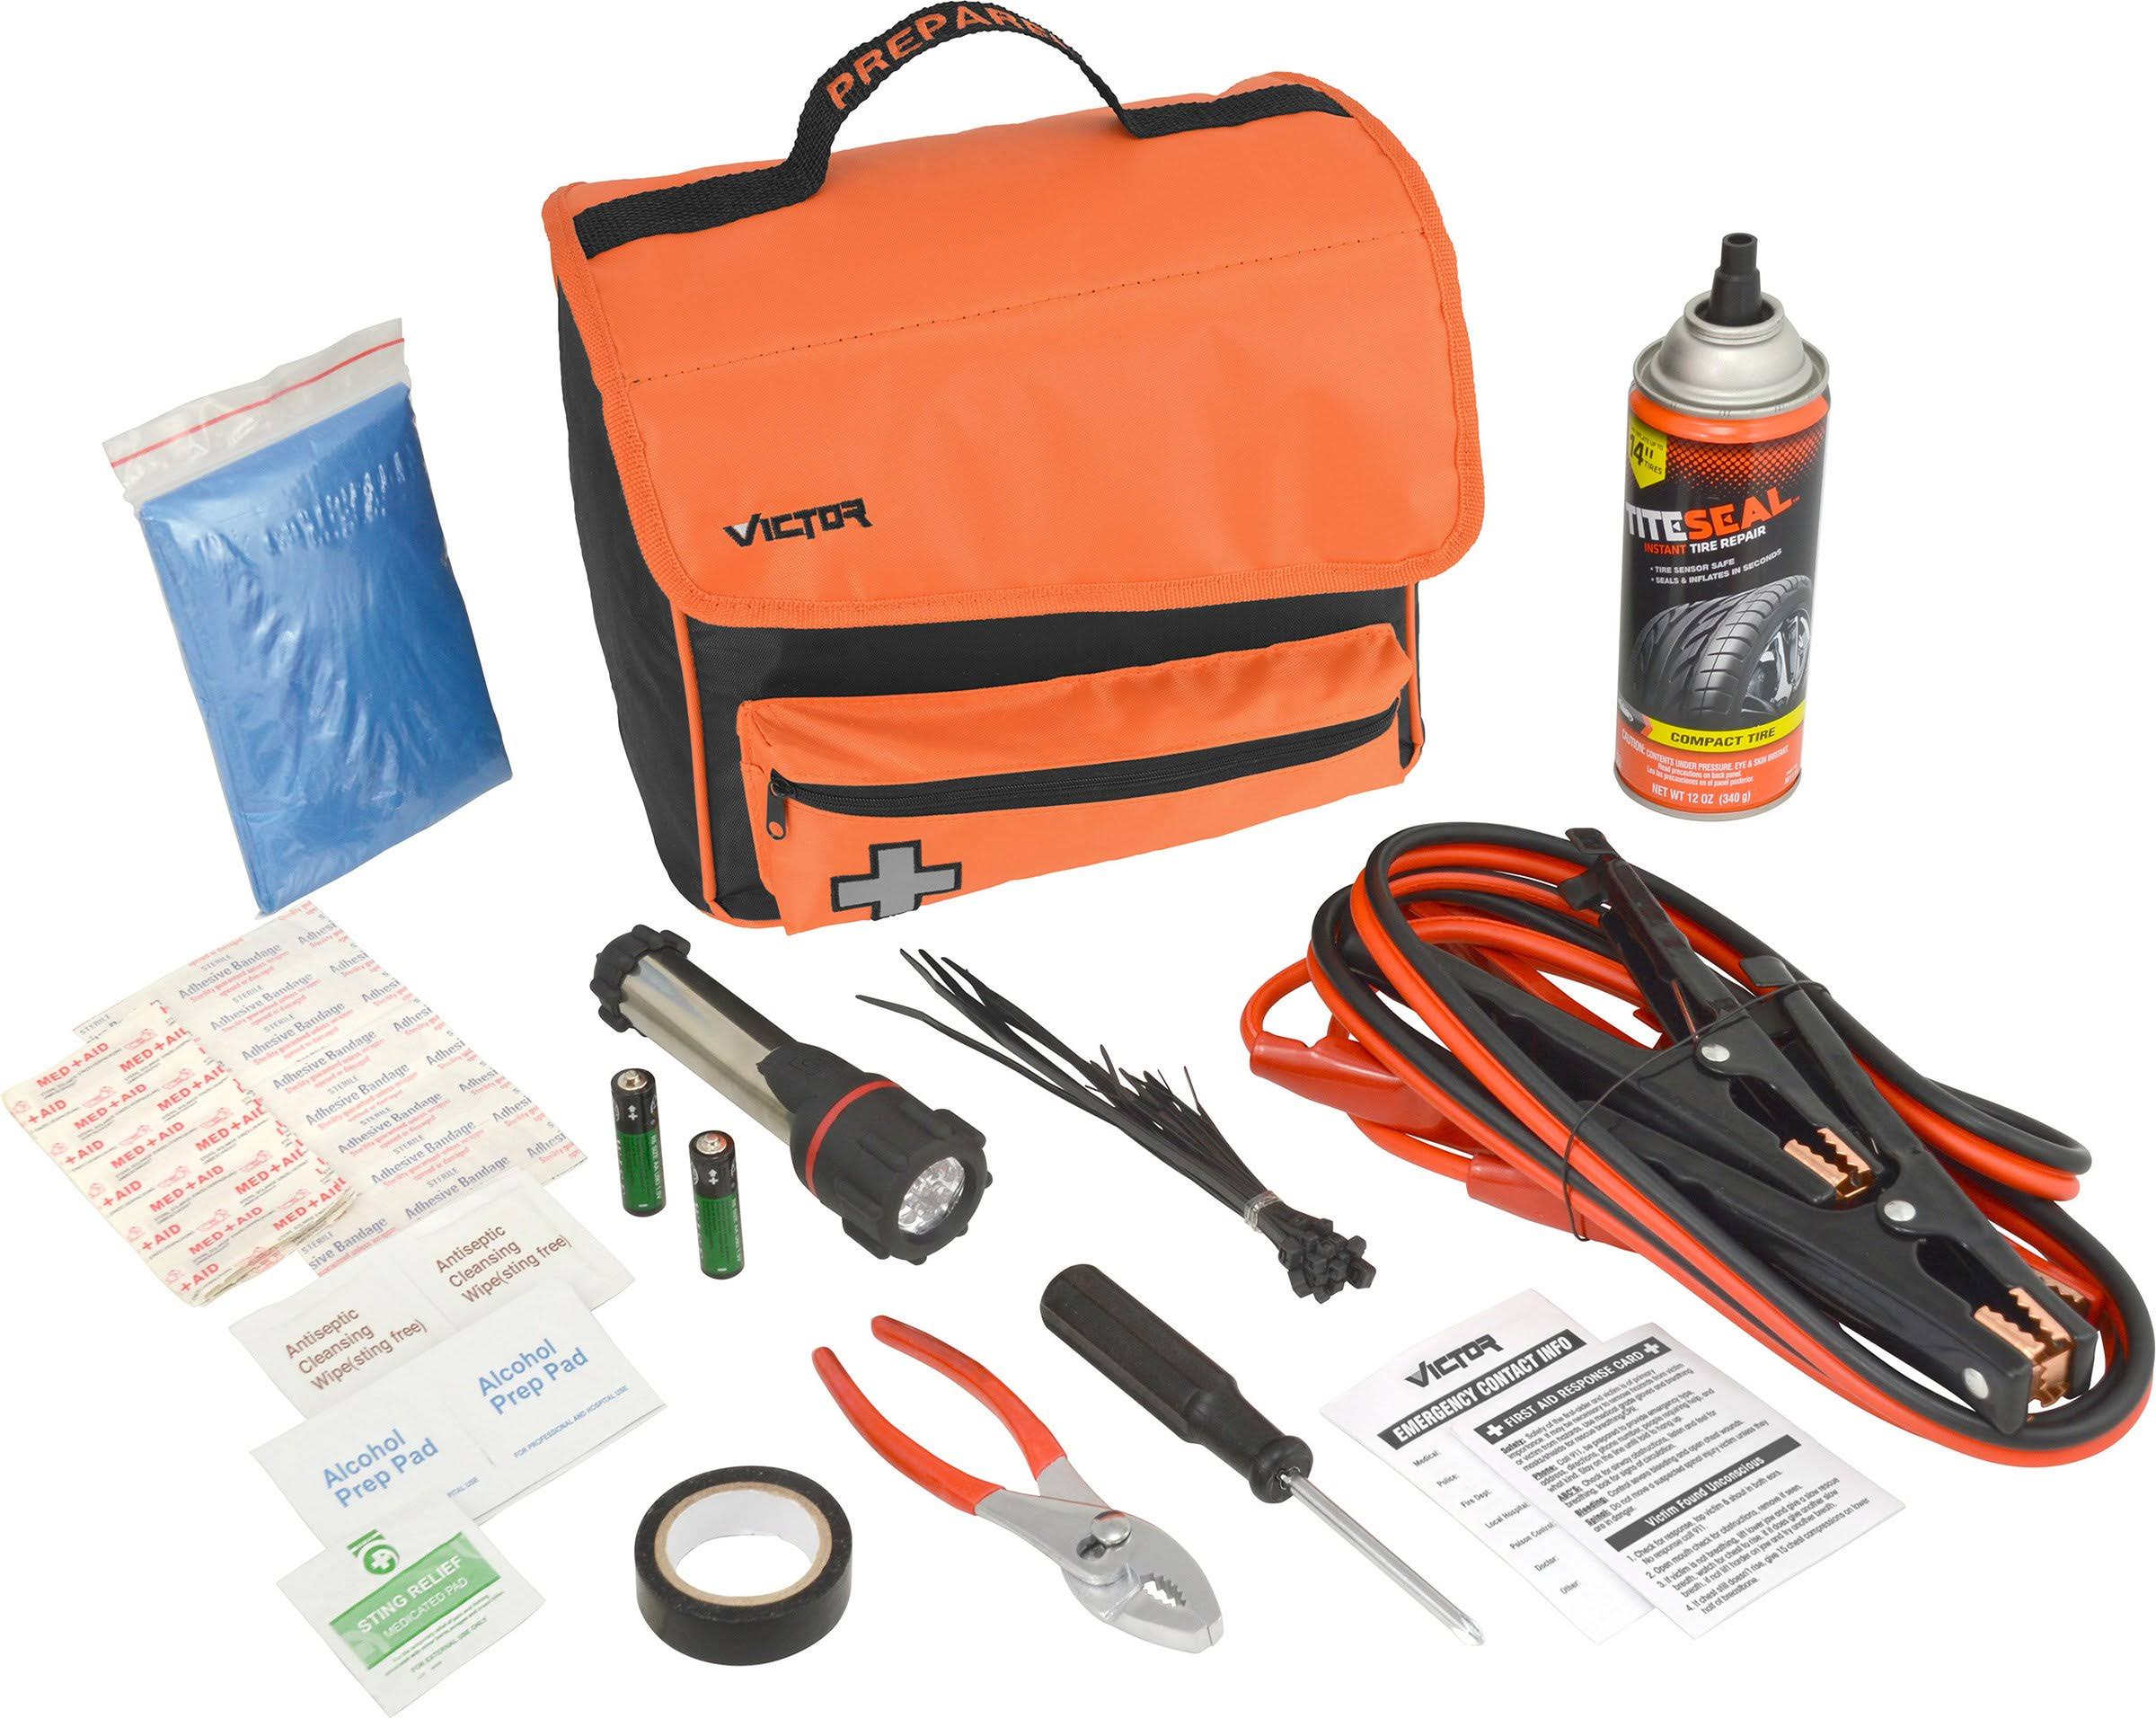 Victor Prepared Emergency Road Kit Set - 57pcs Set